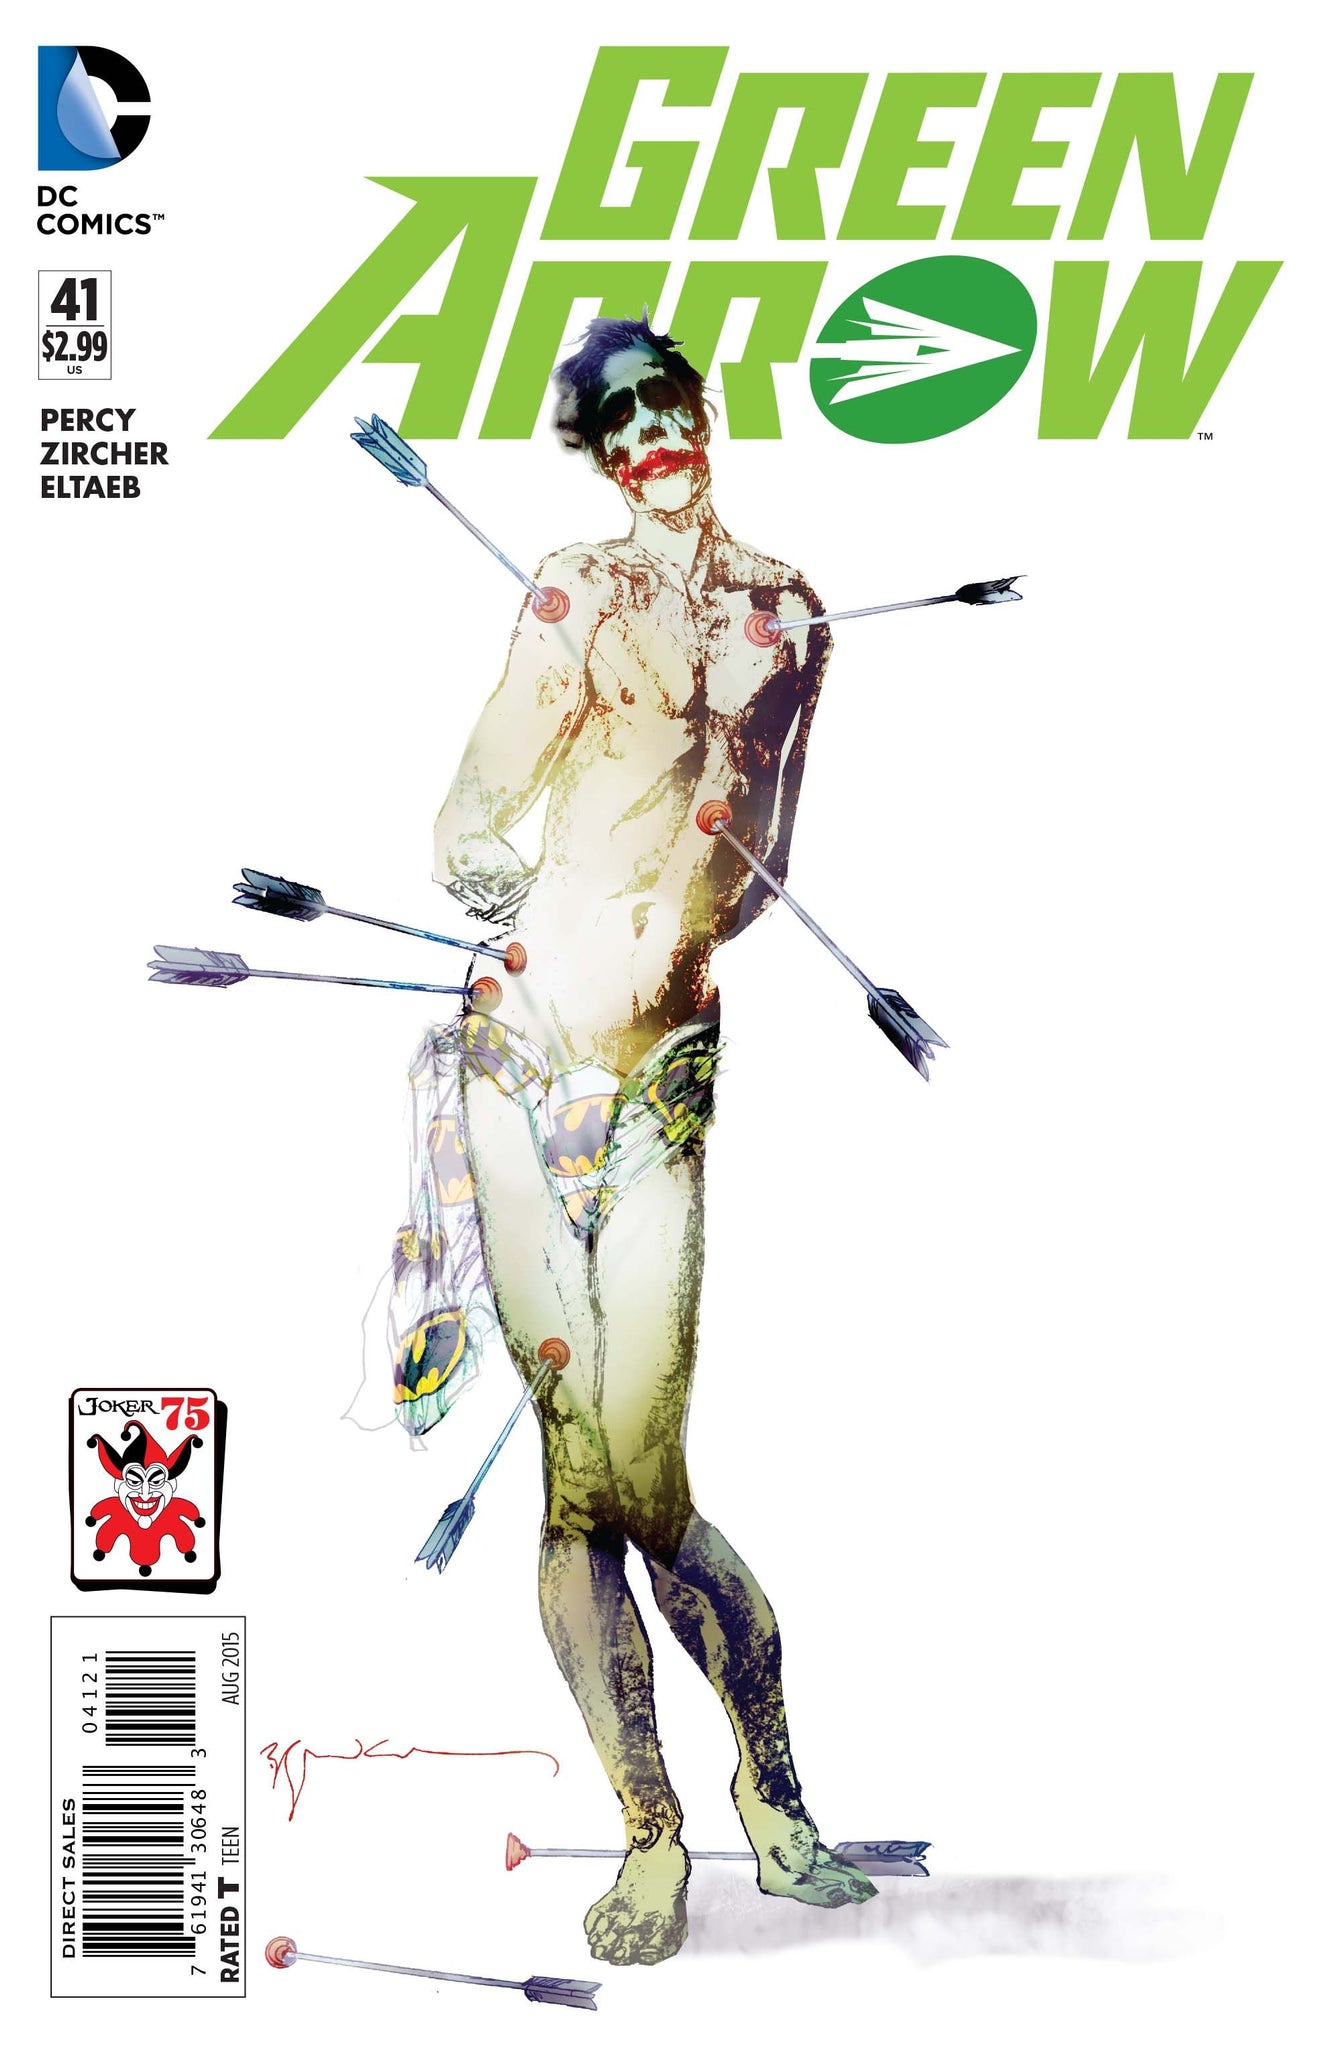 Green Arrow (The New 52) #41 The Joker 75th Anniversary Variant